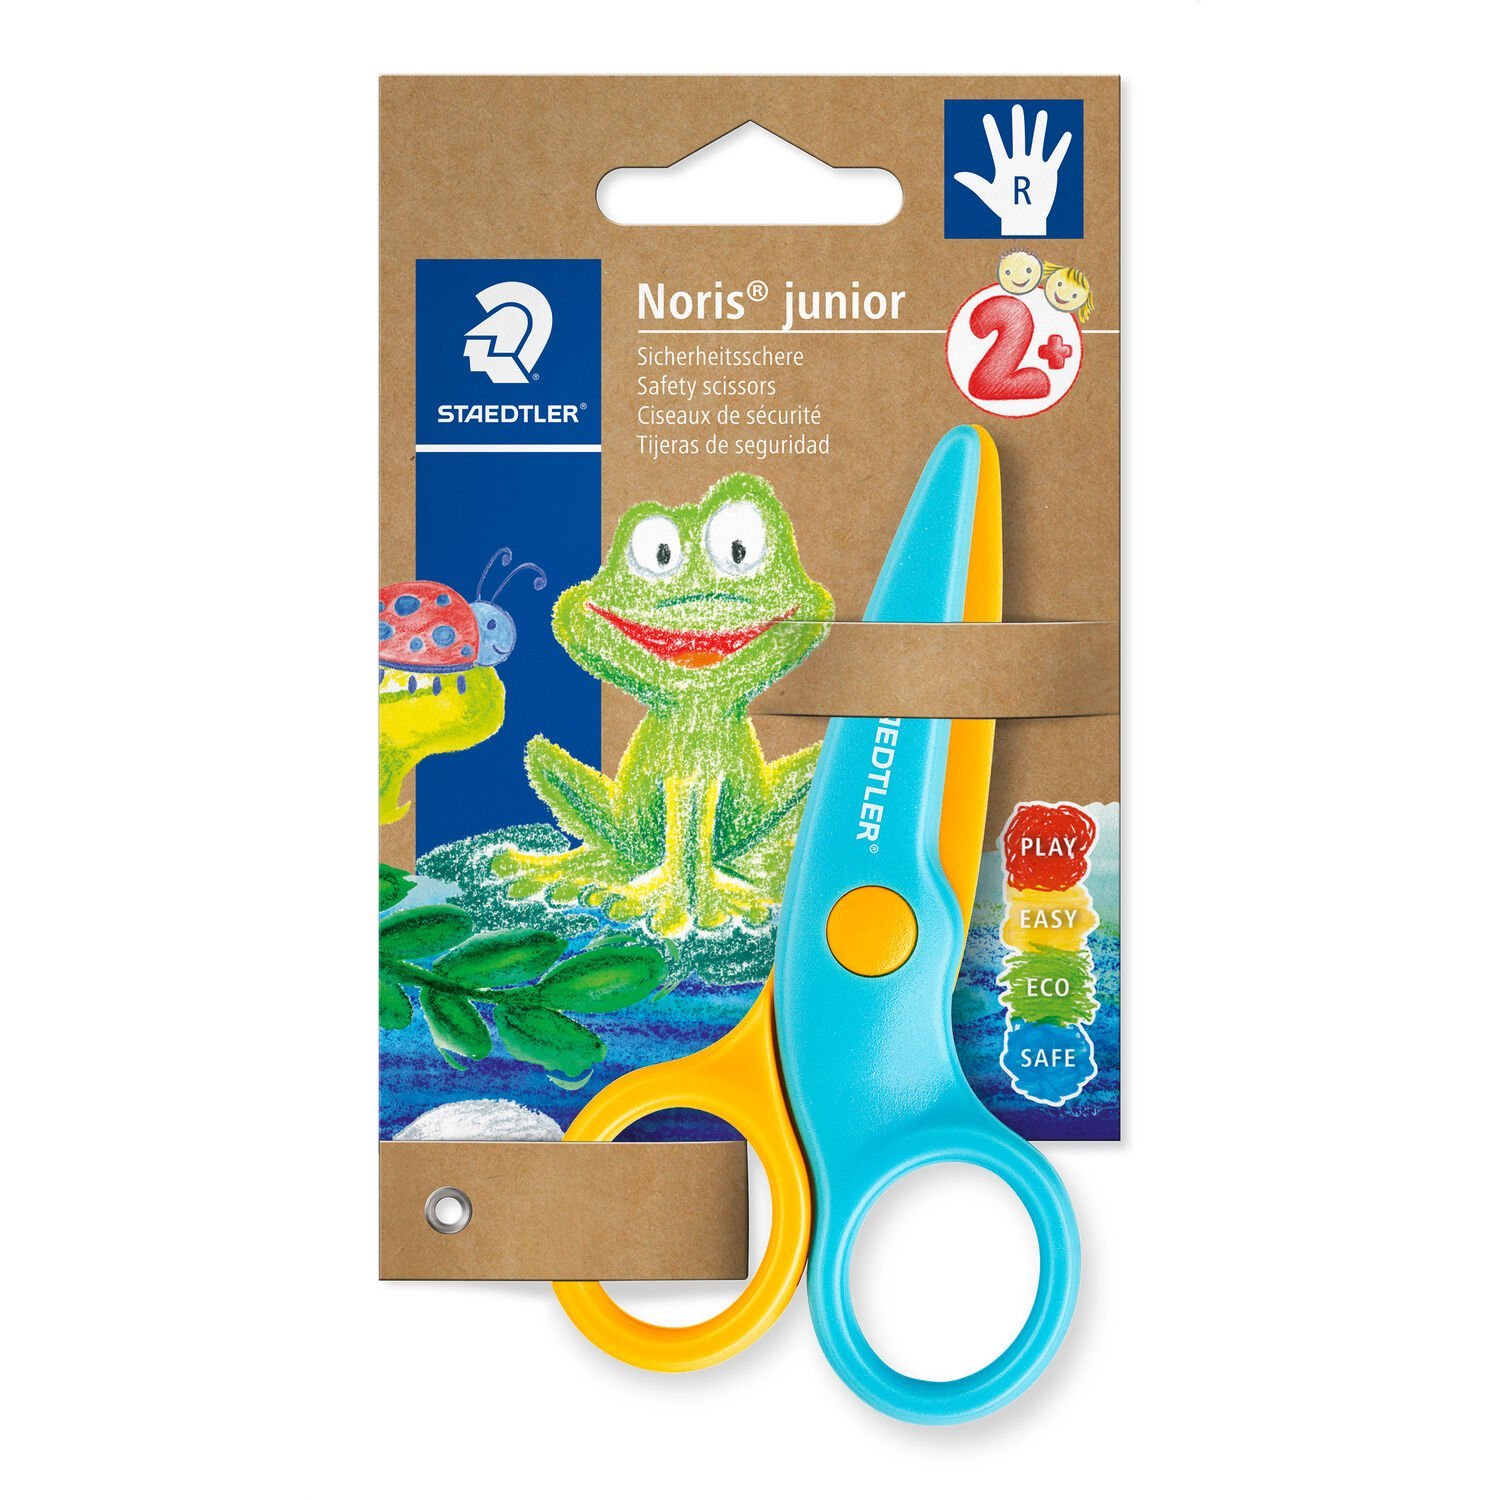 Noris® junior 965 40 - Safety scissors for toddlers